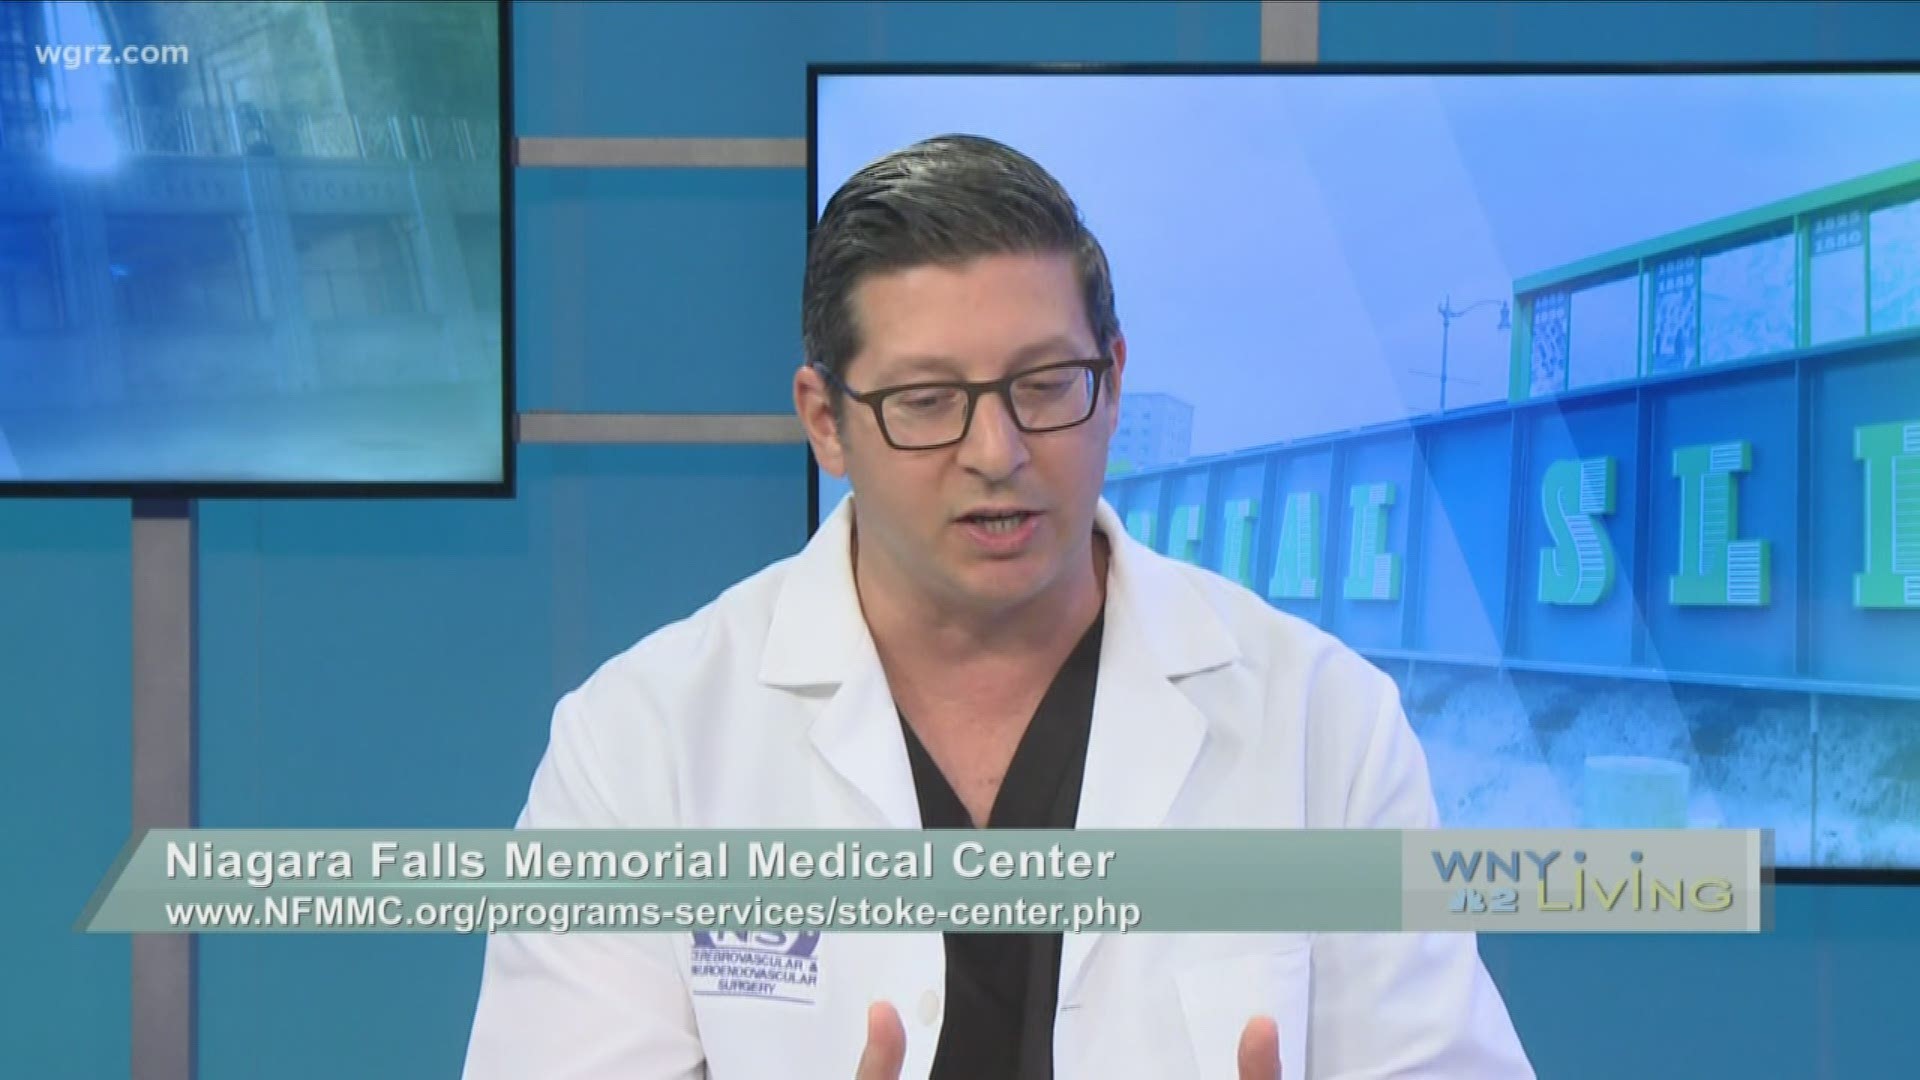 WNY Living - November 9 - Niagara Falls Memorial Medical Center (THIS VIDEO IS SPONSORED BY NIAGARA FALLS MEMORIAL MEDICAL CENTER)